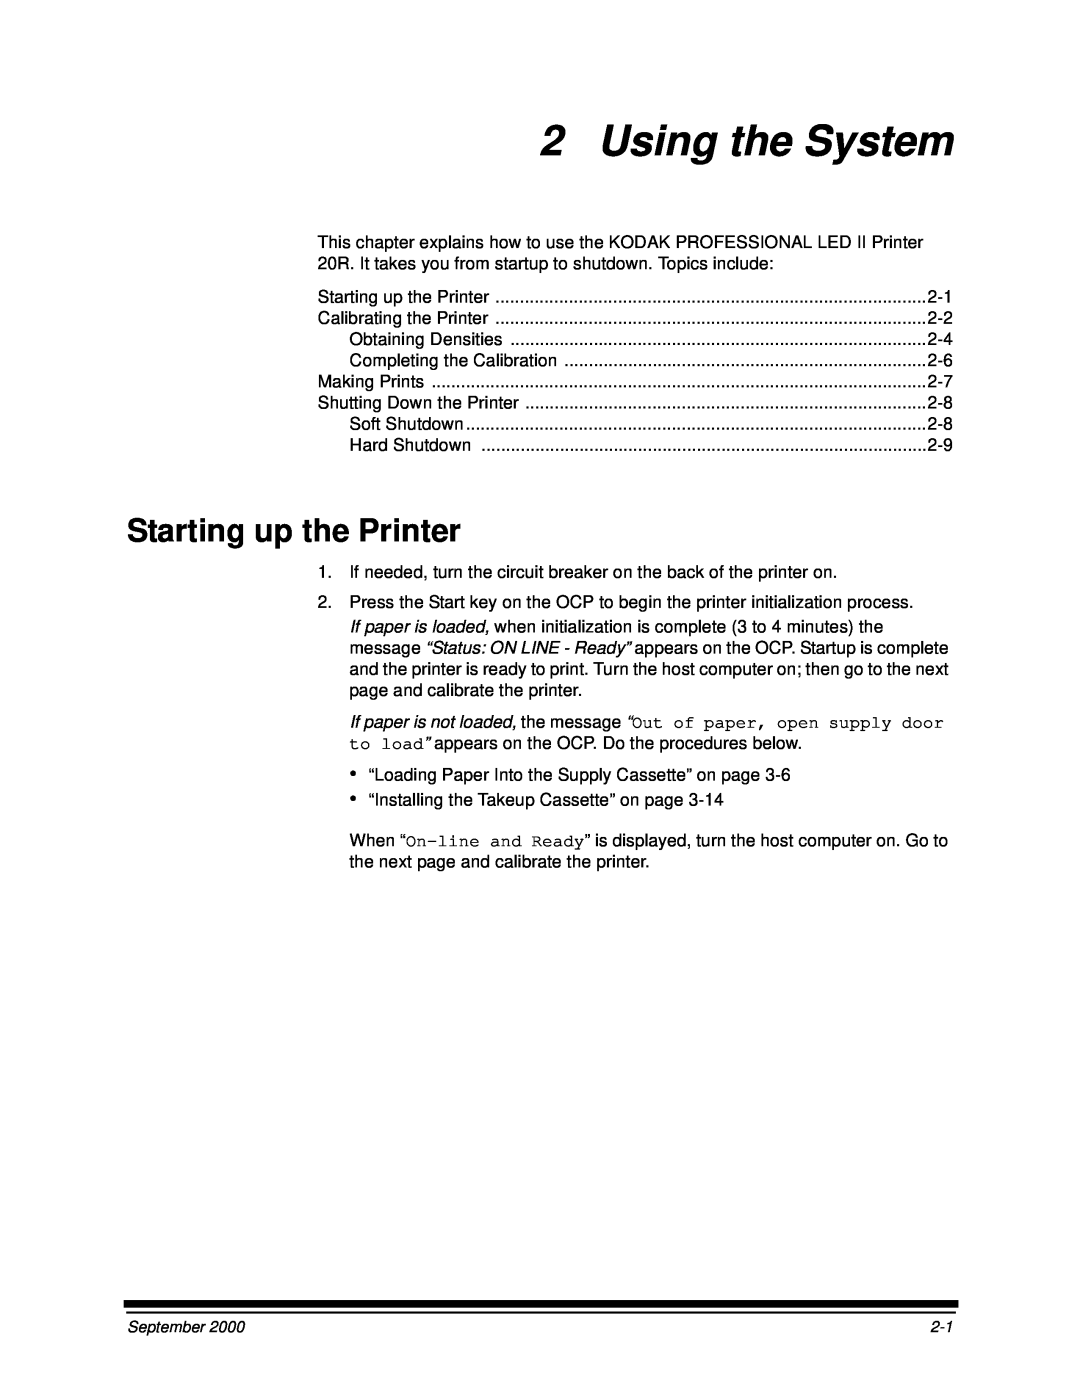 Kodak 20R manual Using the System, Starting up the Printer 